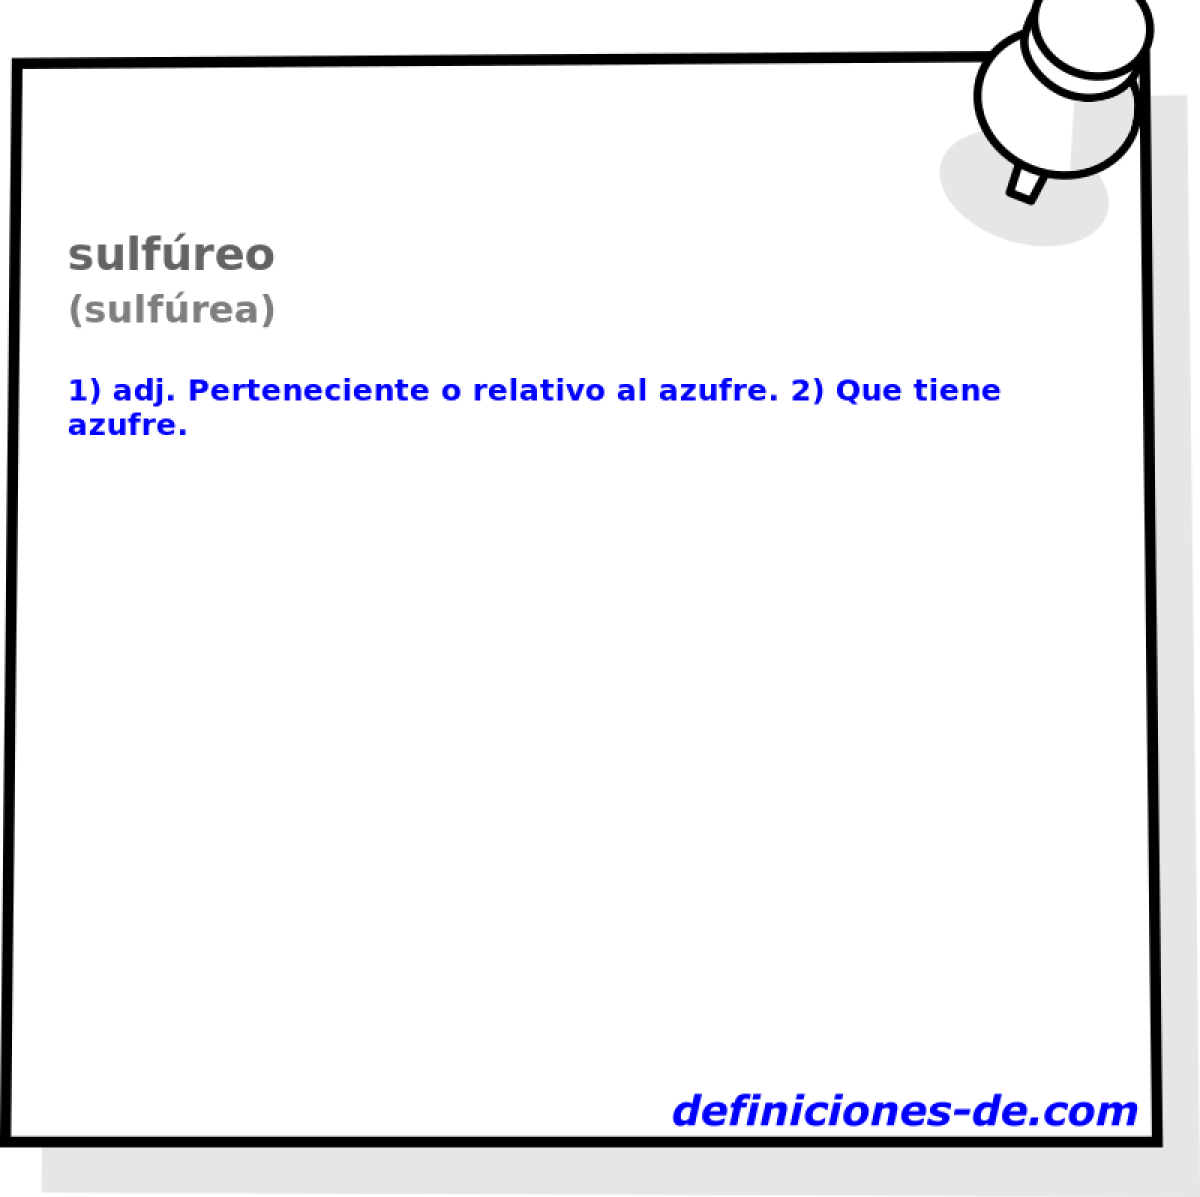 sulfreo (sulfrea)